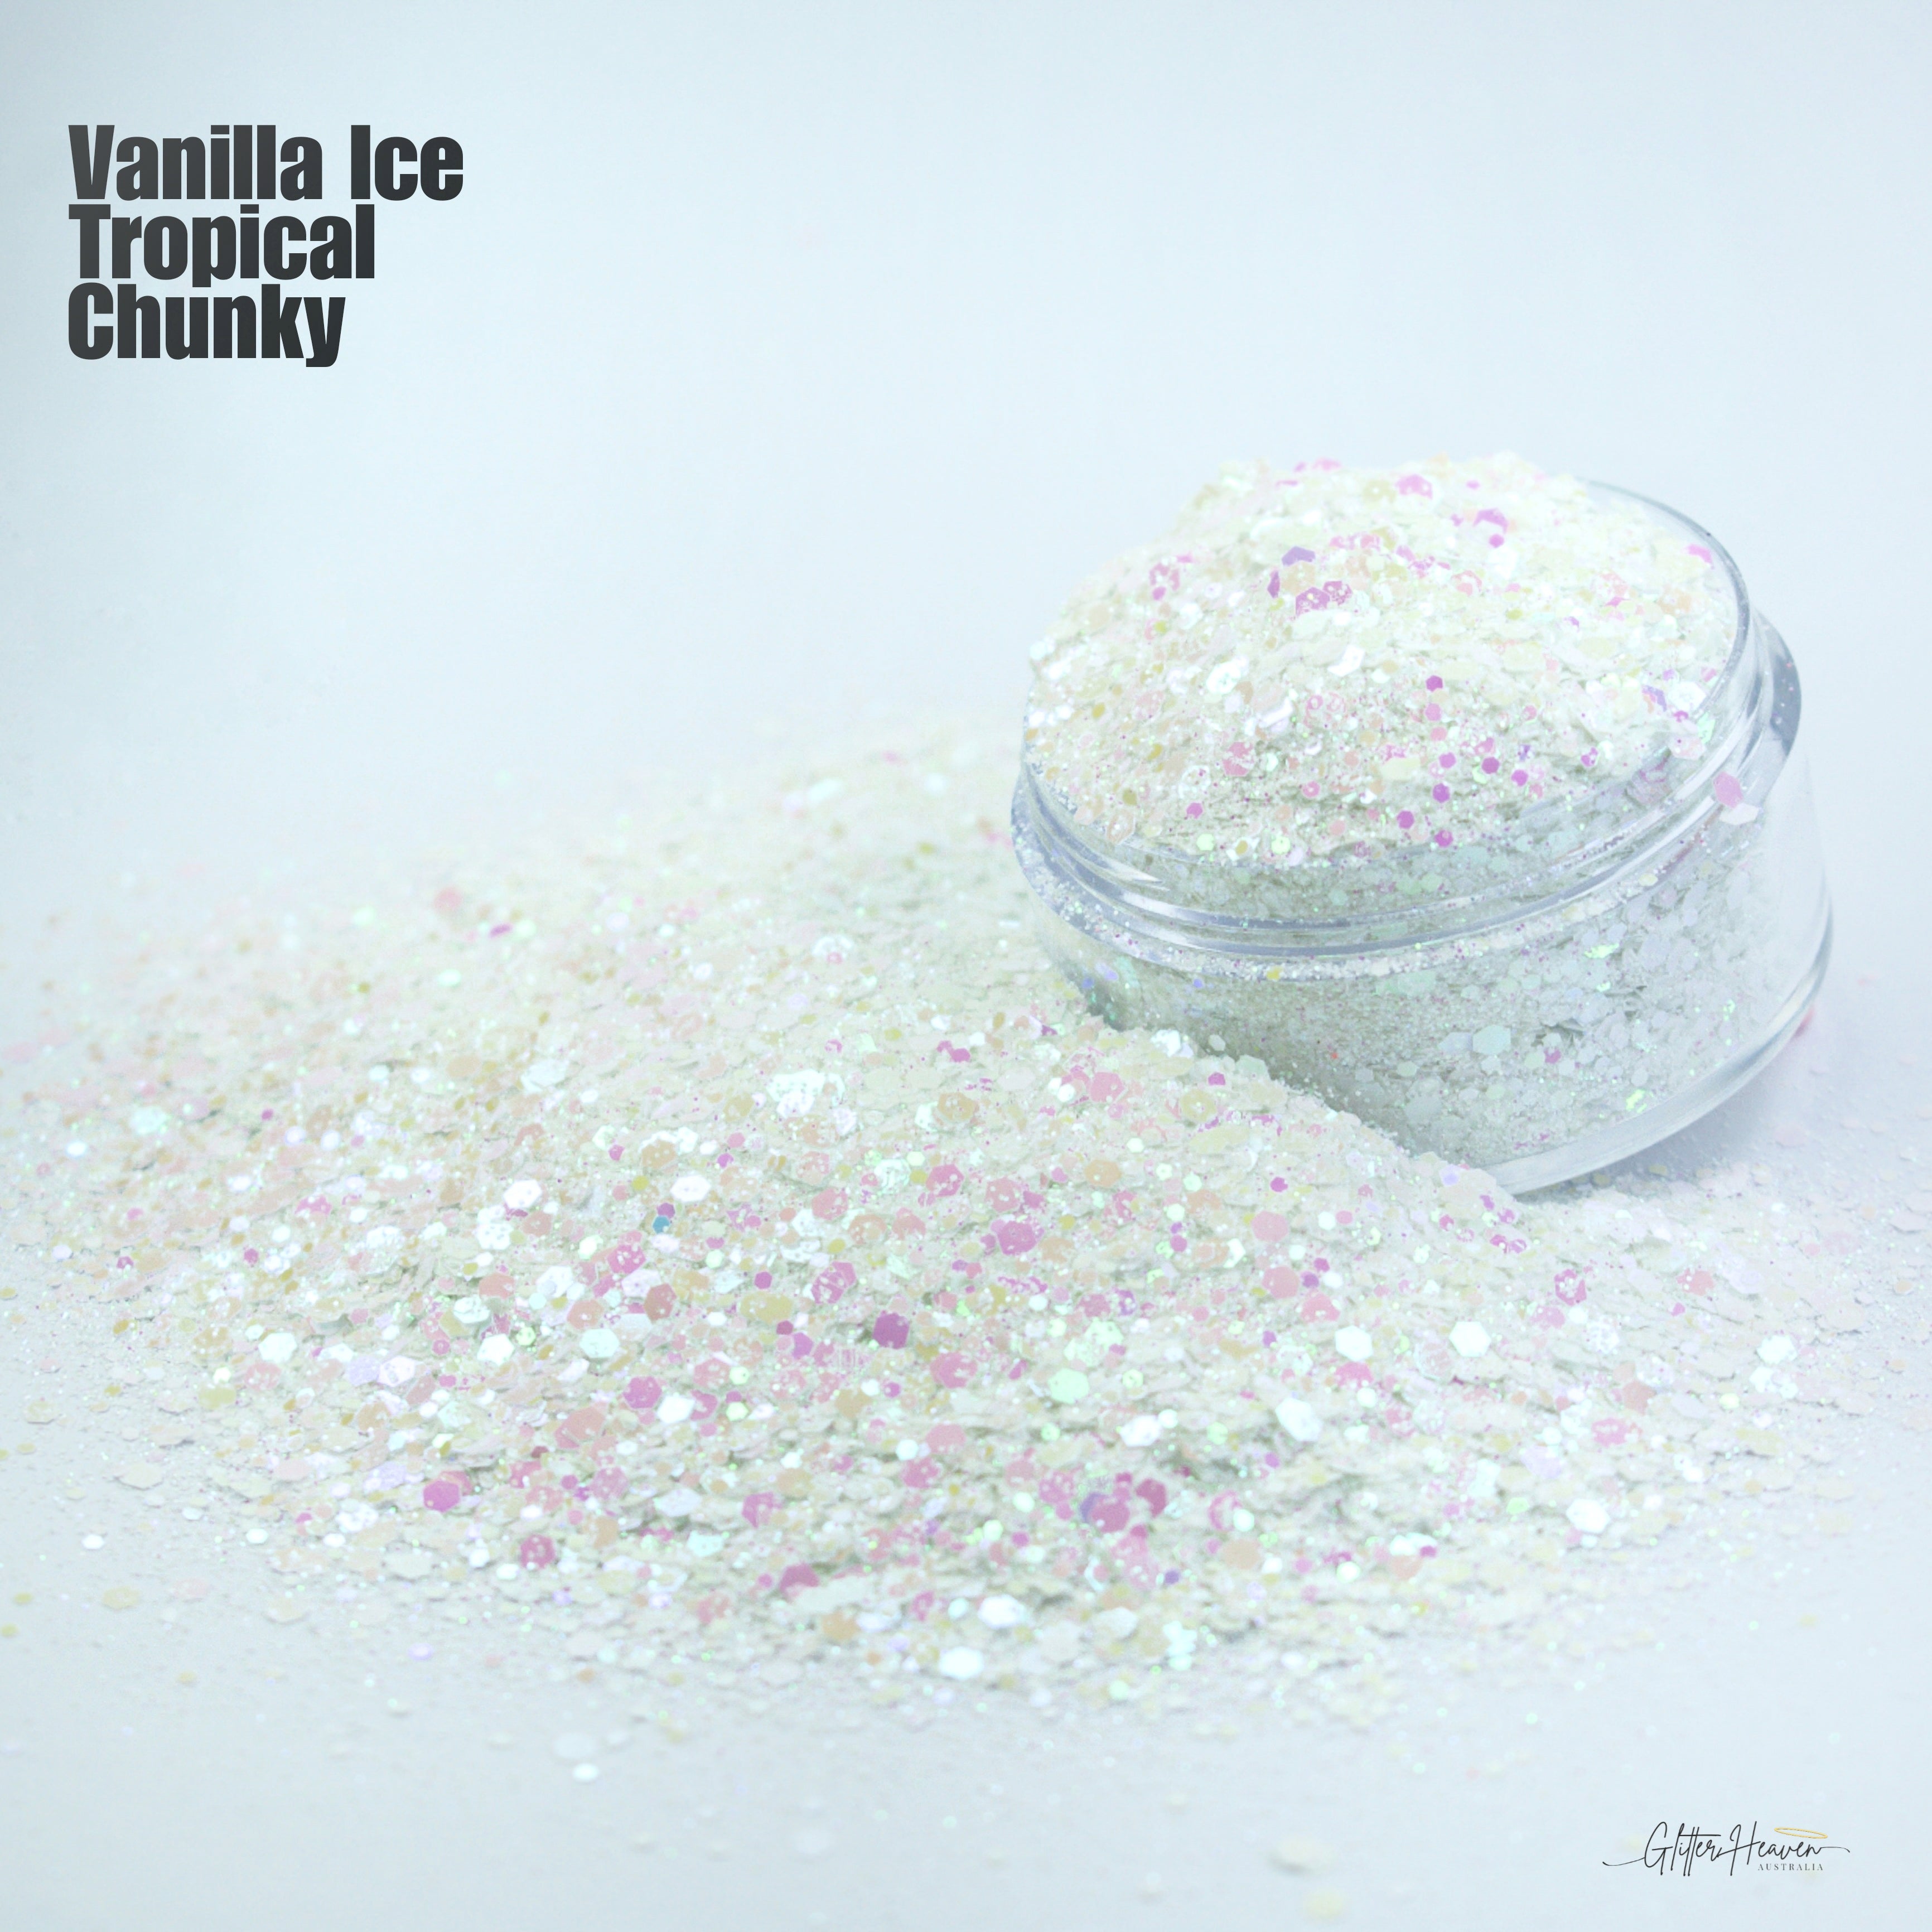 Vanilla Ice Chunky Tropical